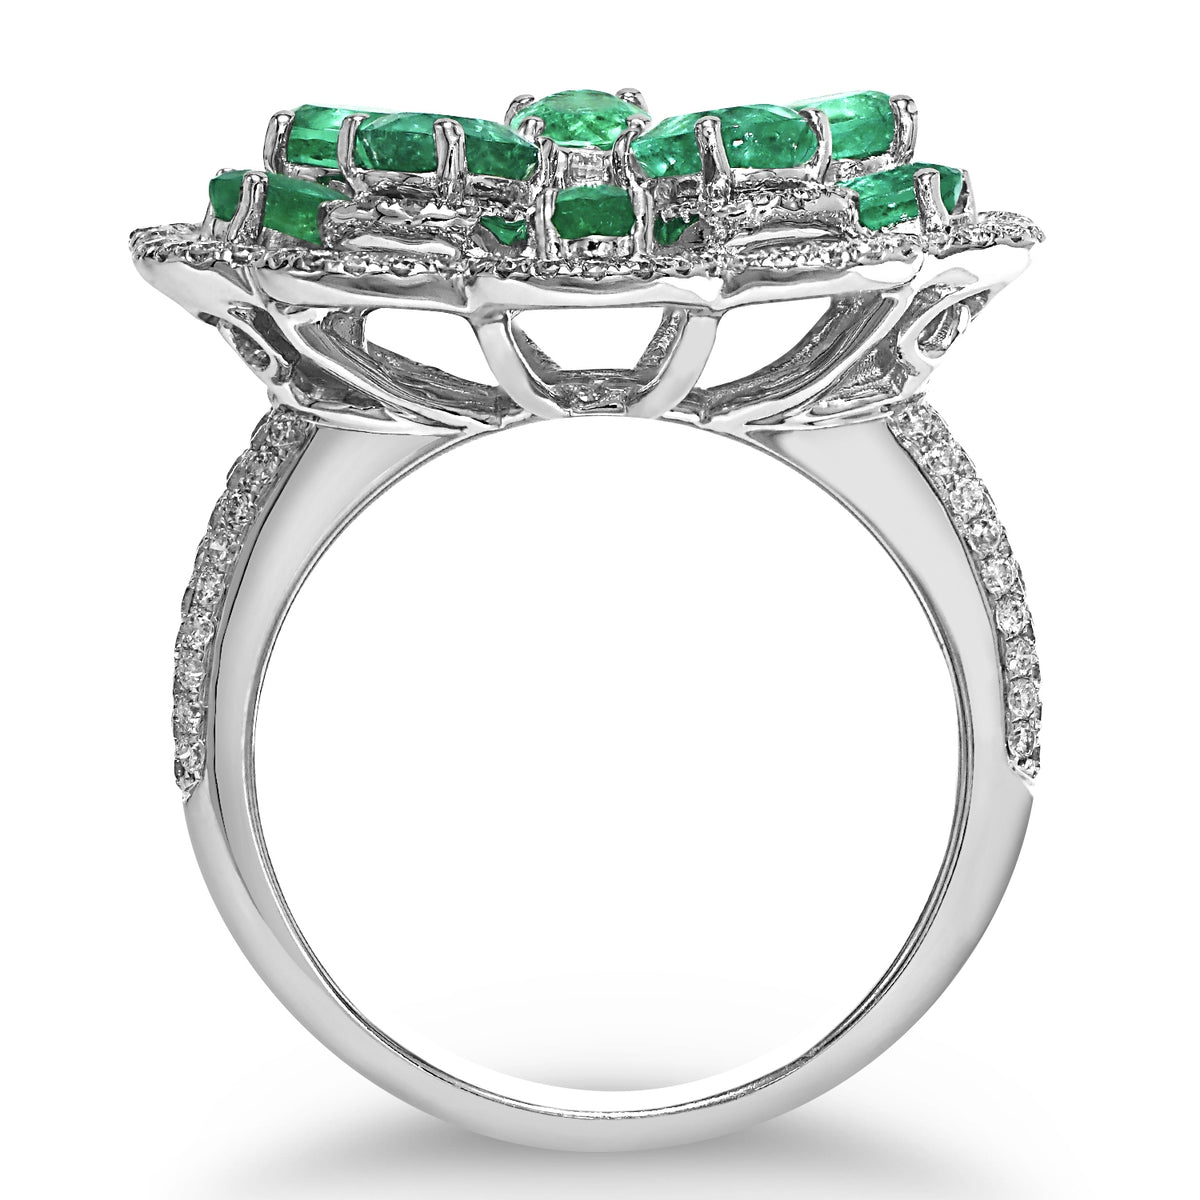 Emerald and Diamond Flower Ring